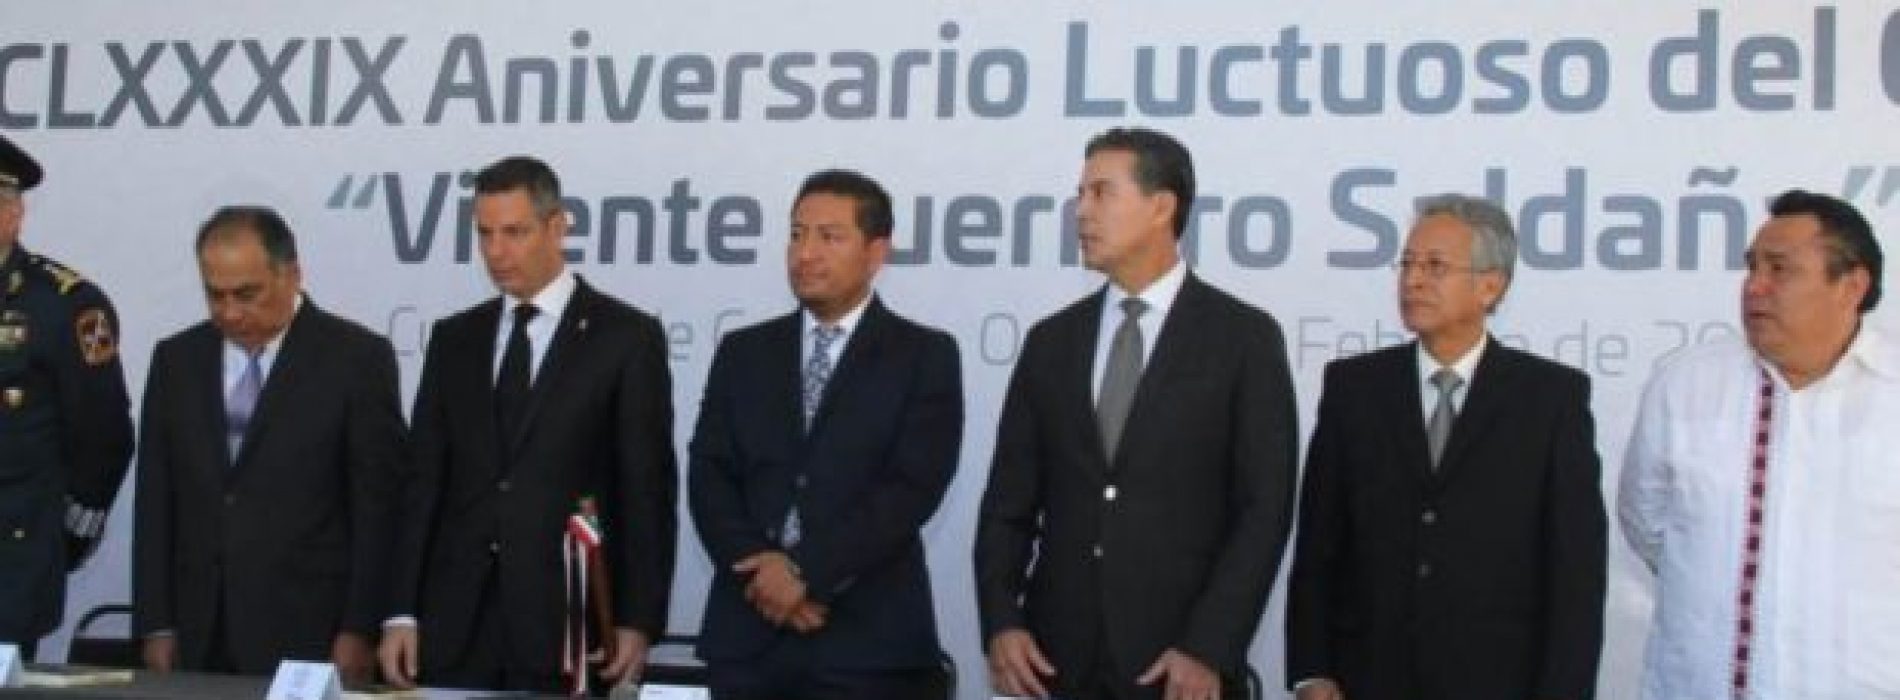 Convoca magistrado Eduardo Pinacho Sánchez a preservar legado de Vicente Guerrero